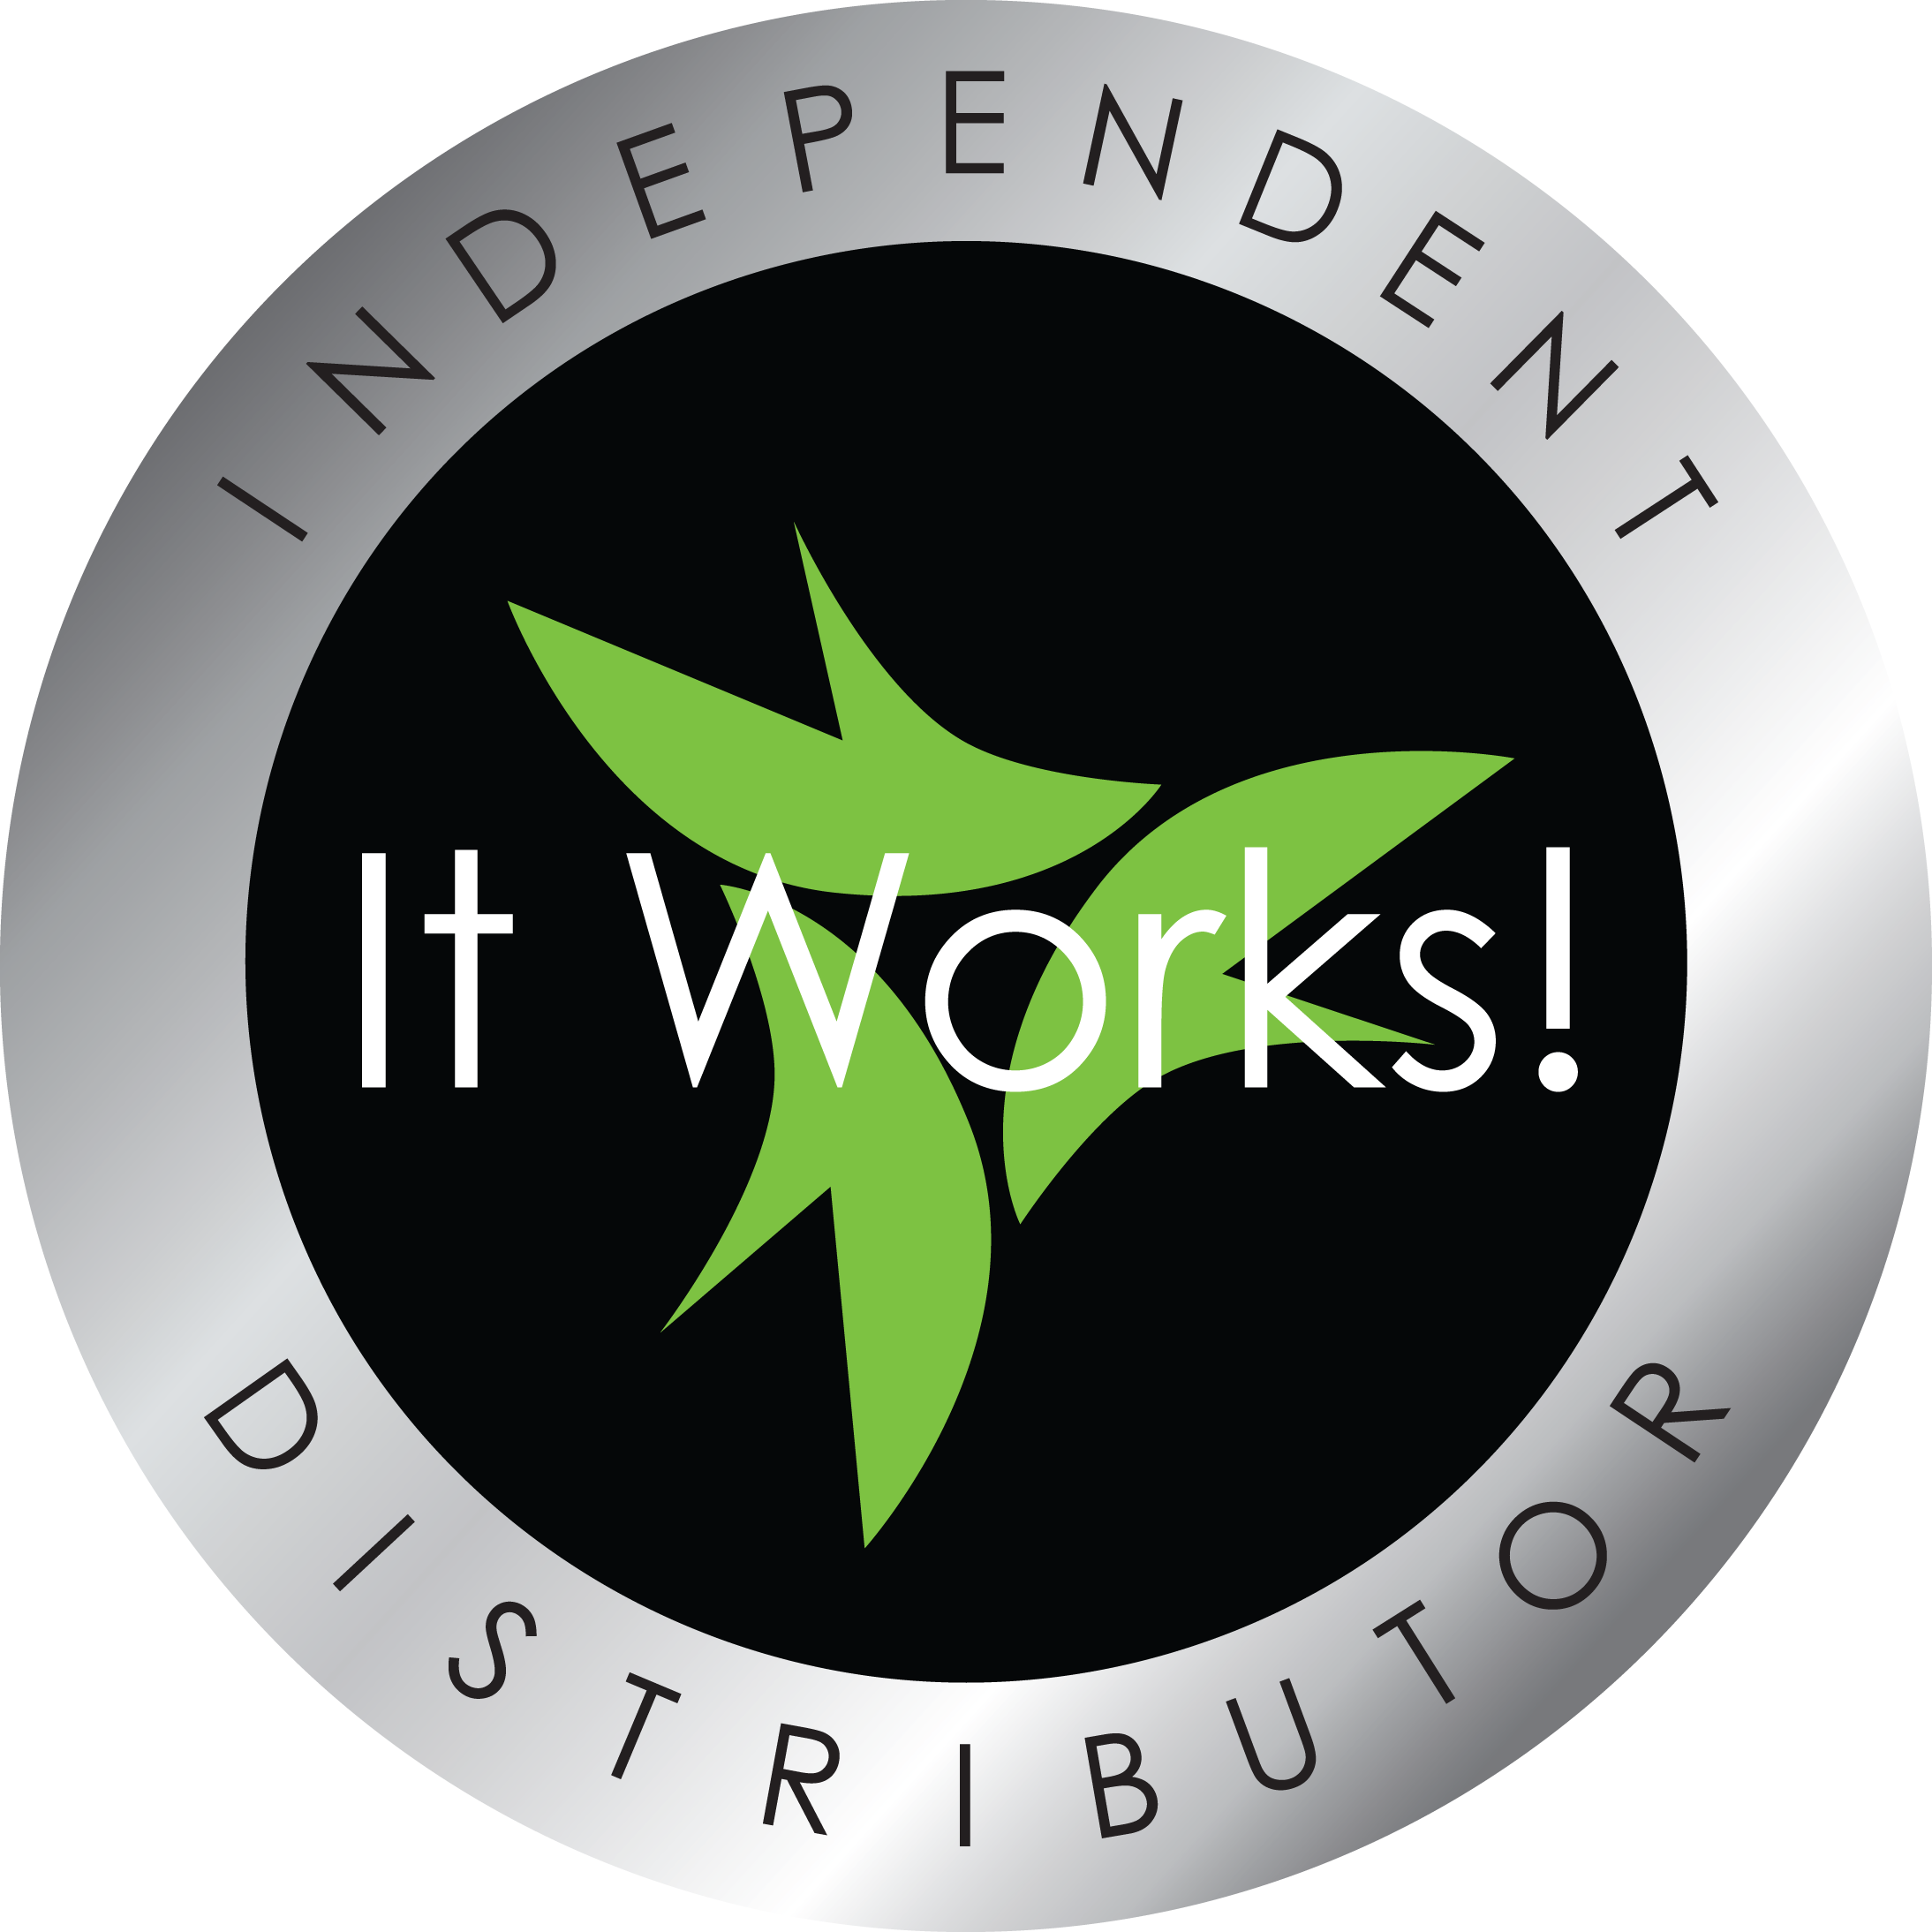 It Works! Independent Distributor Logo photo - 1